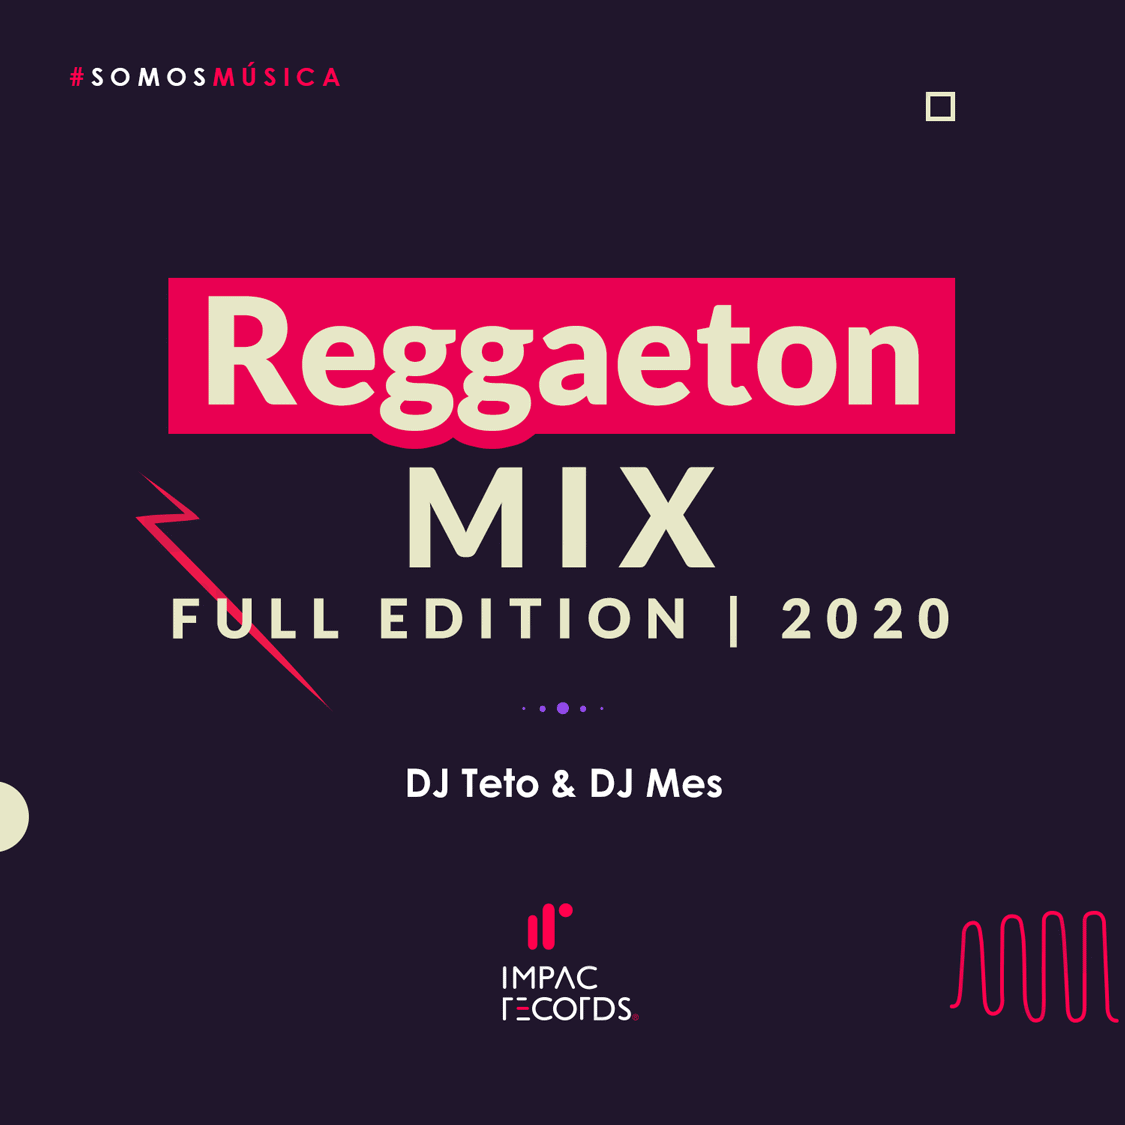 Reggaeton Mix Full Edition 2020 DJ Teto y DJ Mes